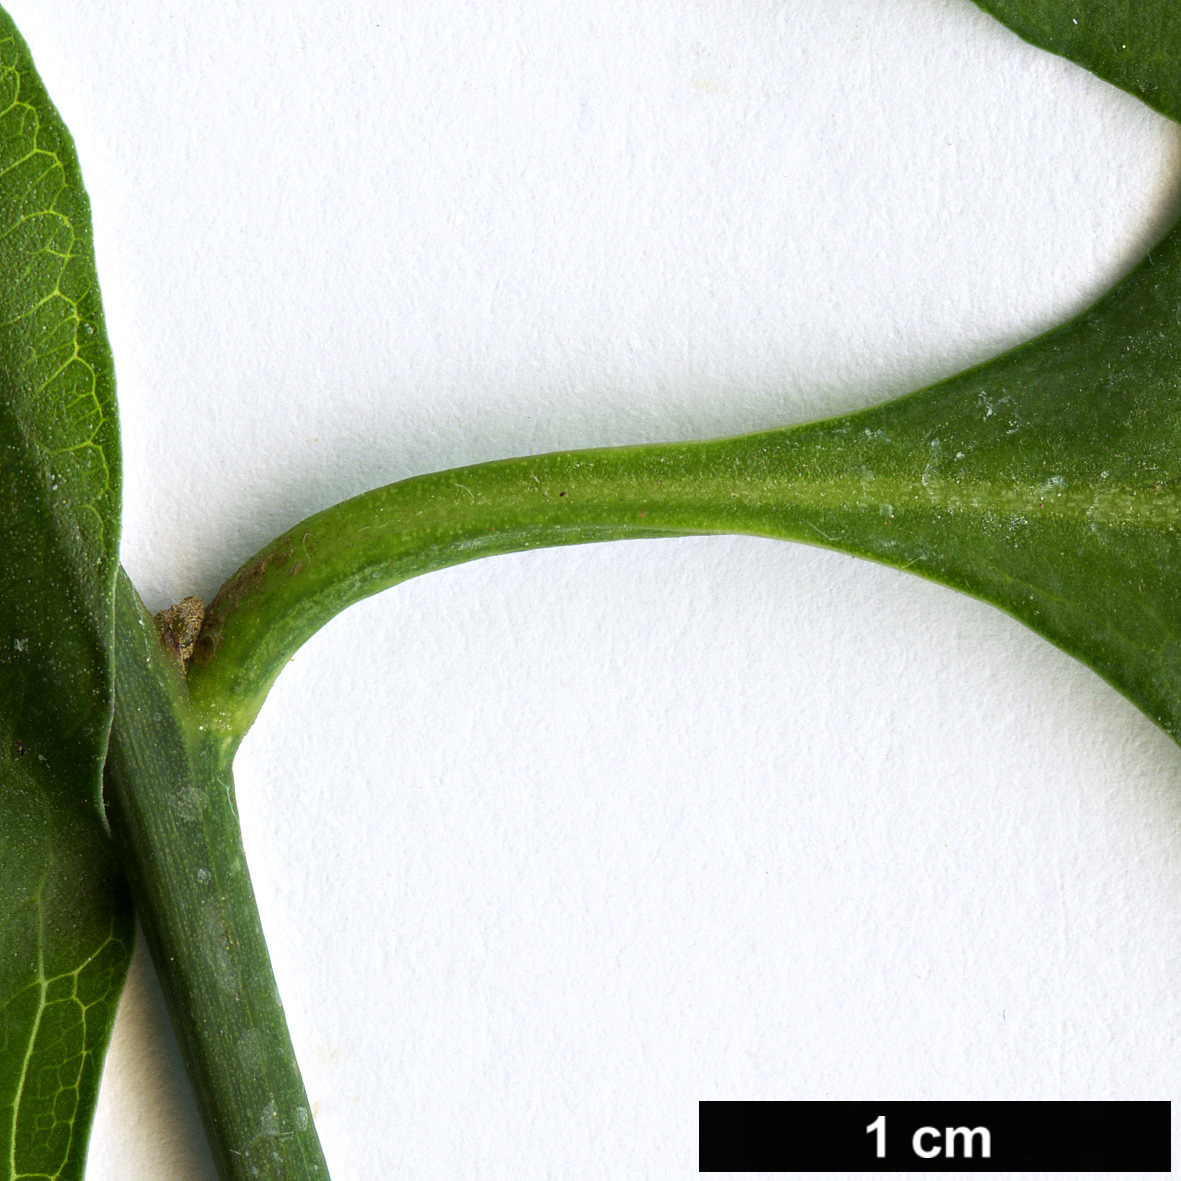 High resolution image: Family: Amaranthaceae - Genus: Bosea - Taxon: yervamora